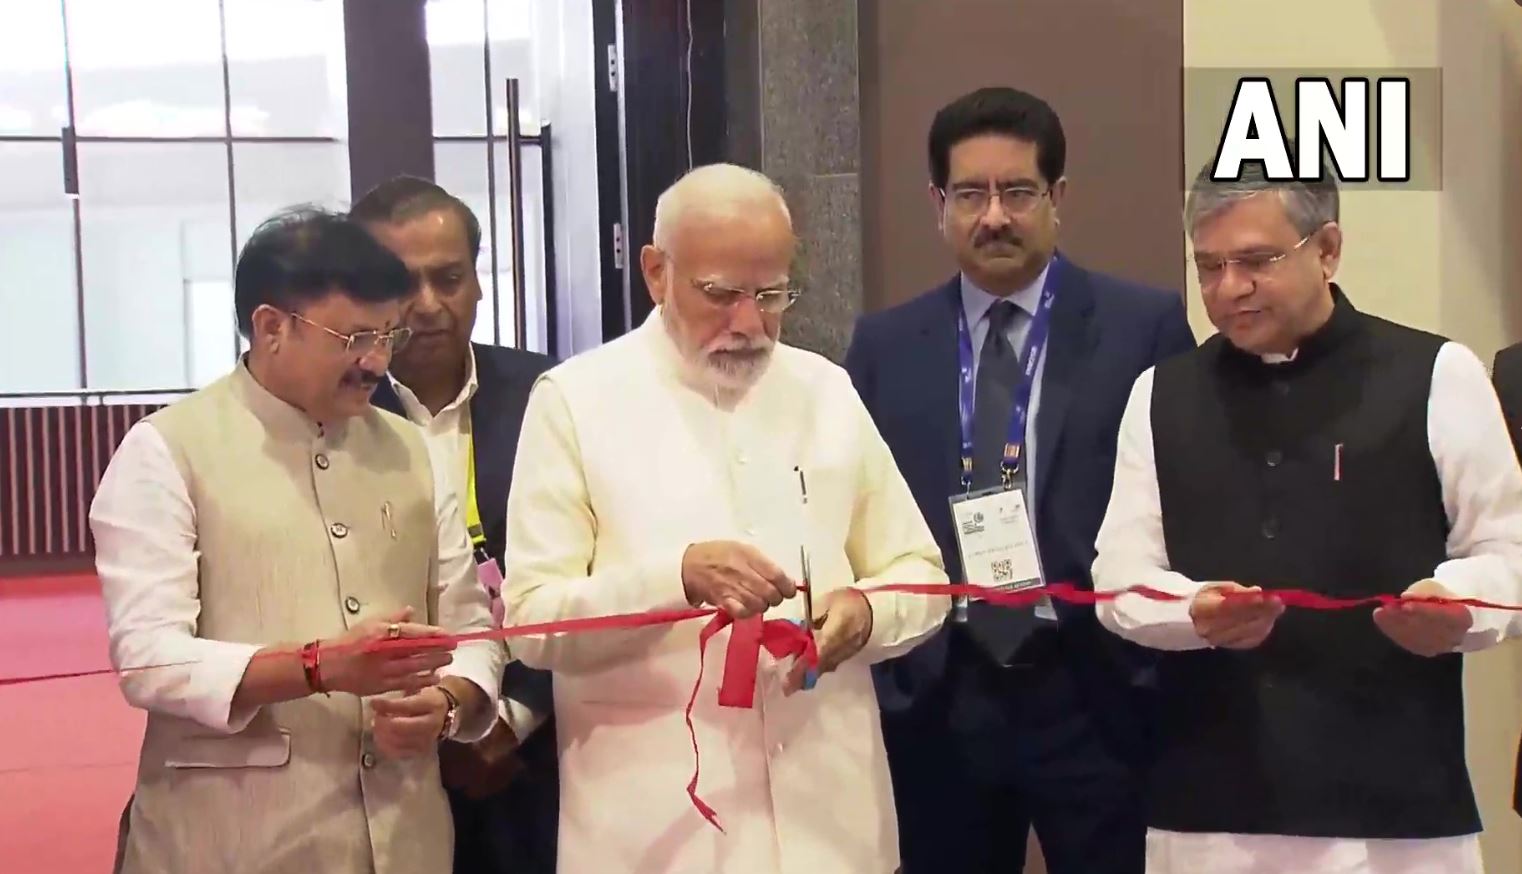 Prime Minister Narendra Modi will launch 5G services in India today